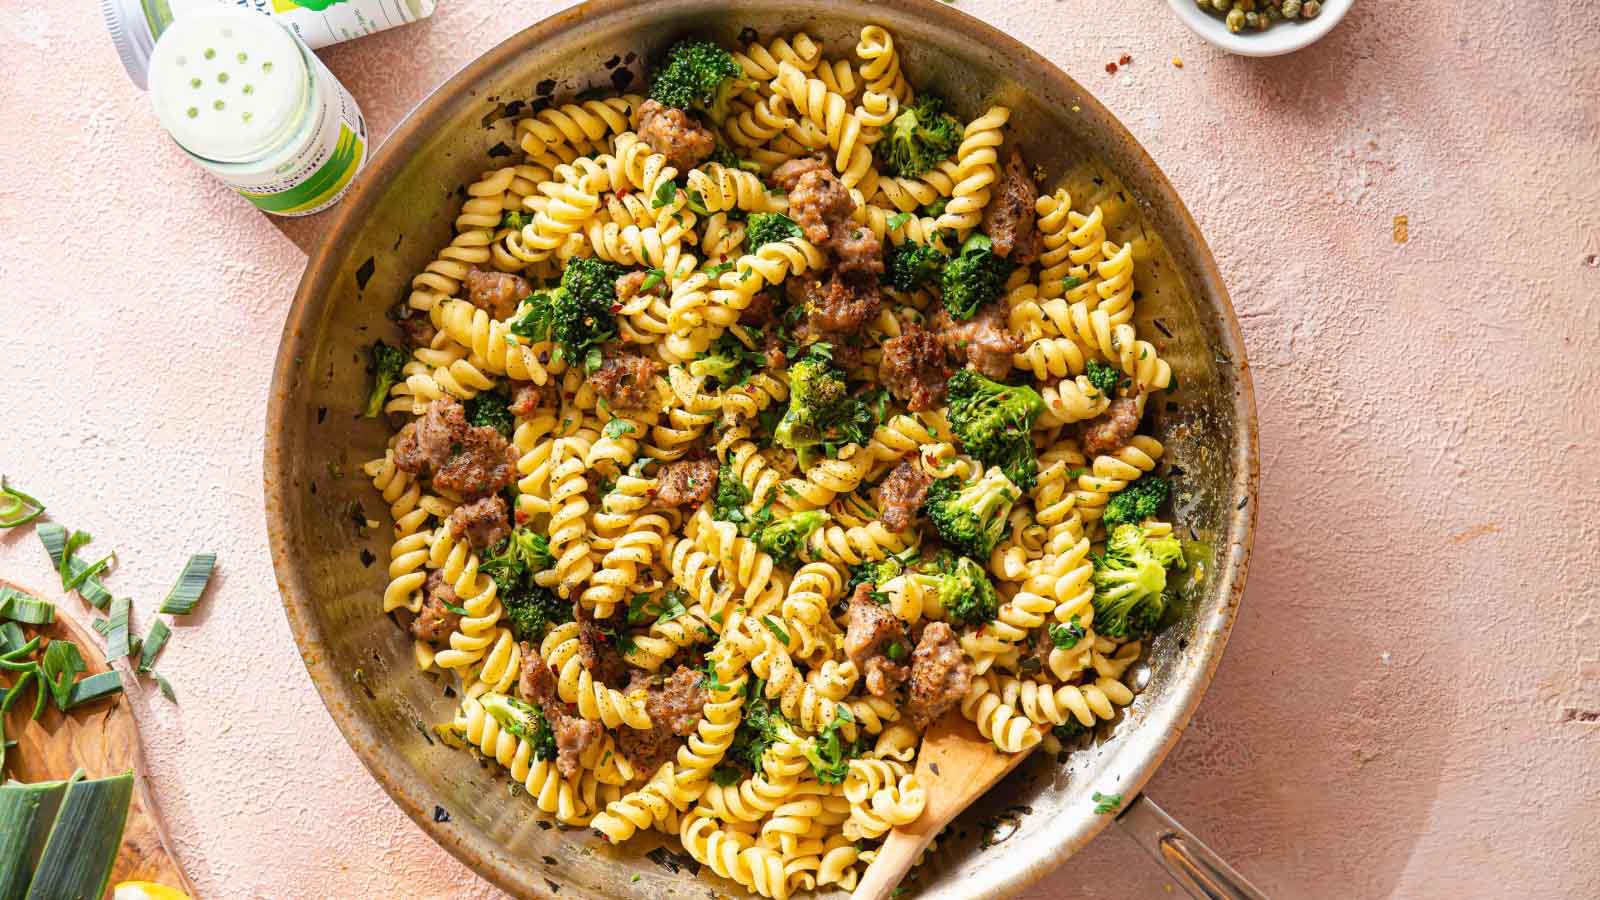 Gourmend recipe for low fodmap broccoli sausage pasta